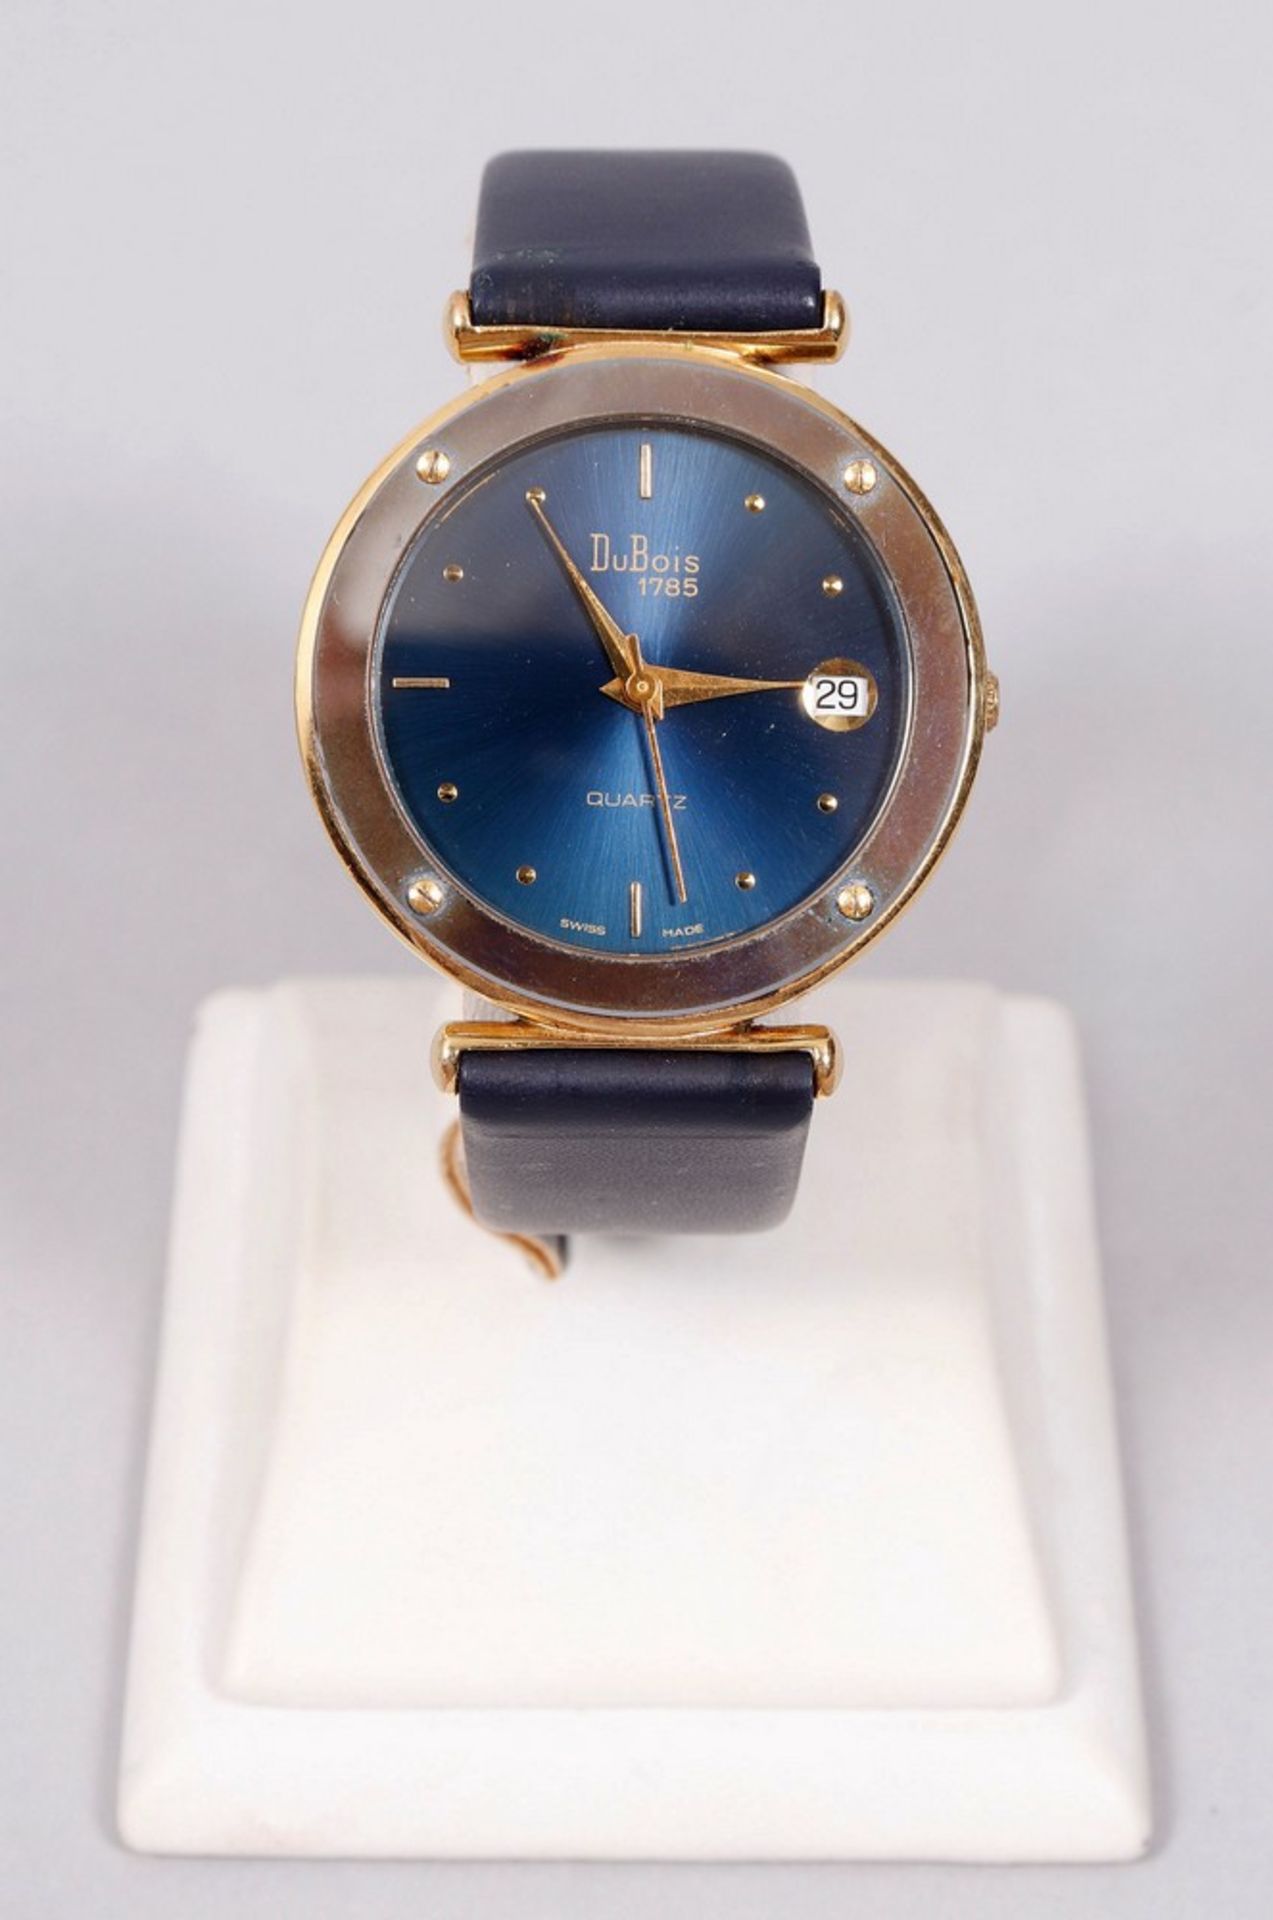 Watch, Dubois 1785, quartz